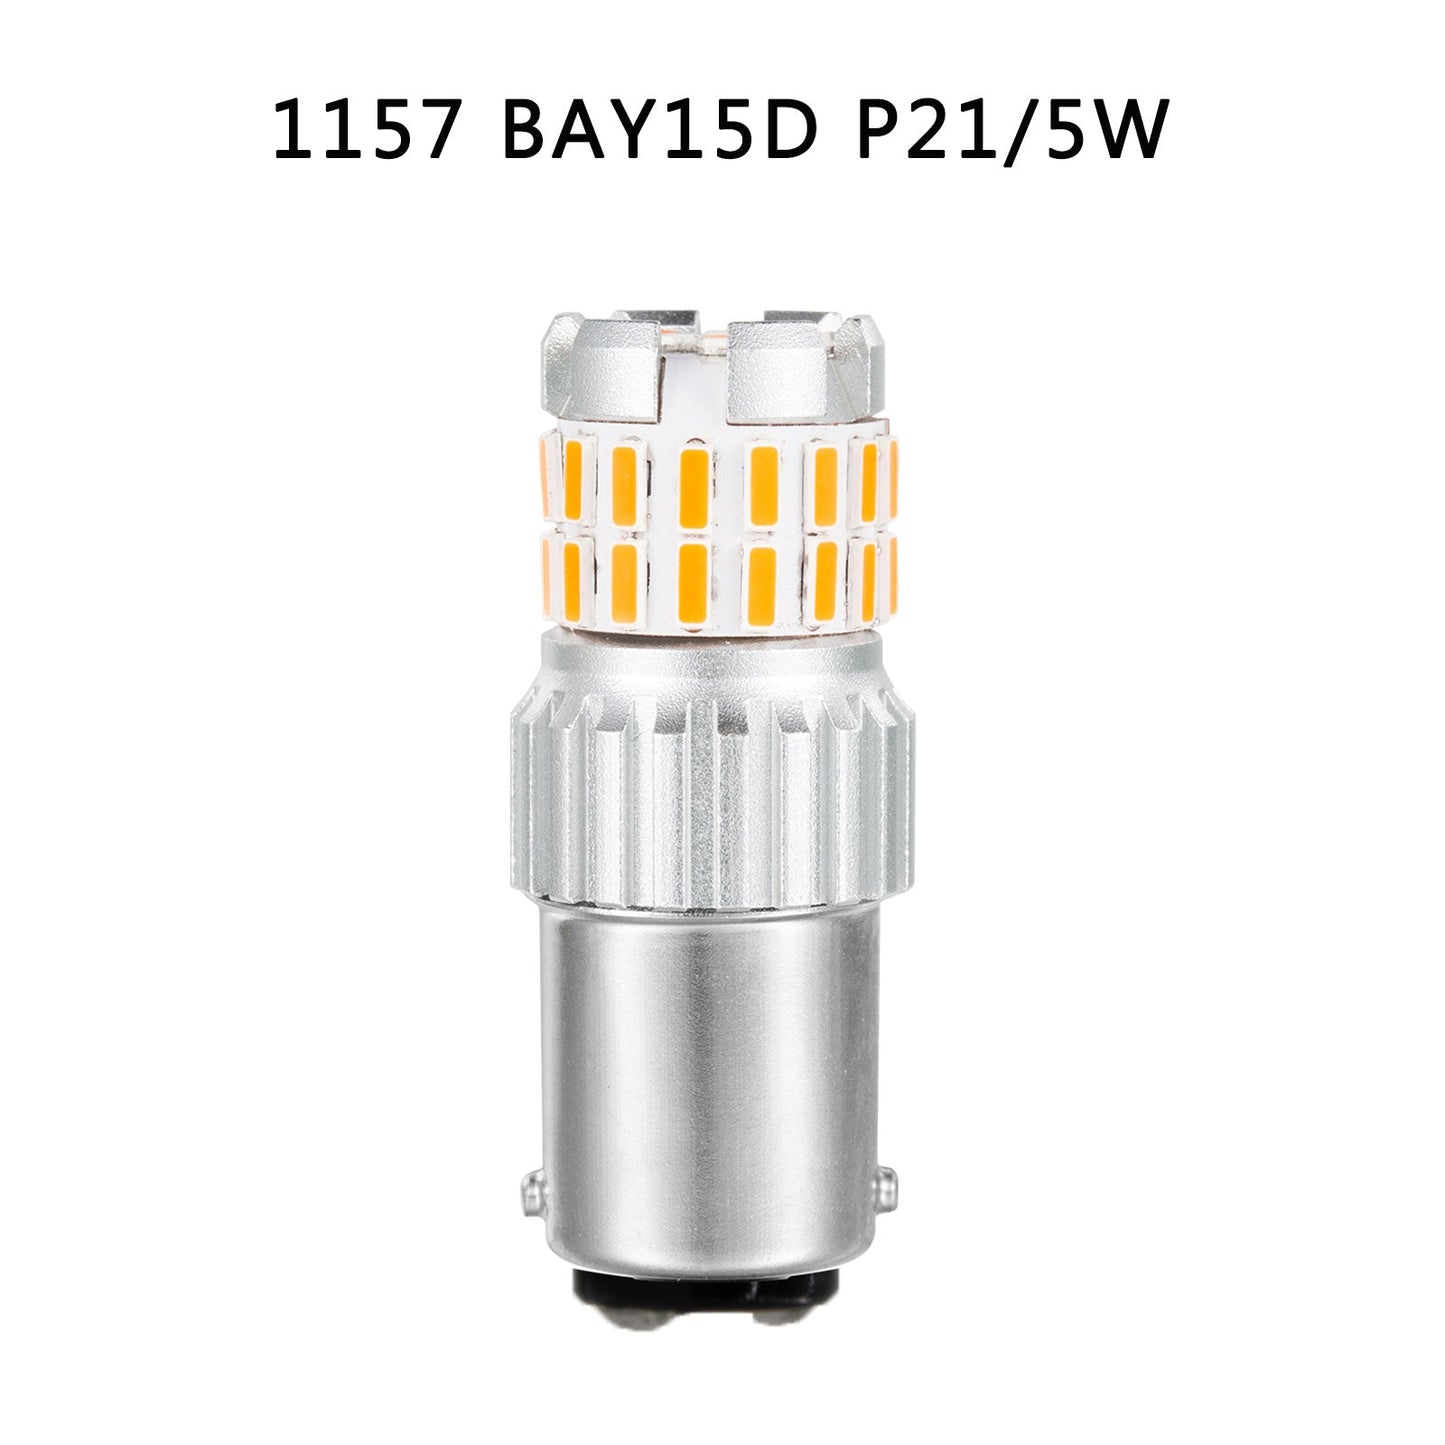 1156 BAU15S PY21W LED Brake Reverse Light Bulb Canbus Error Free 6500K Yellow